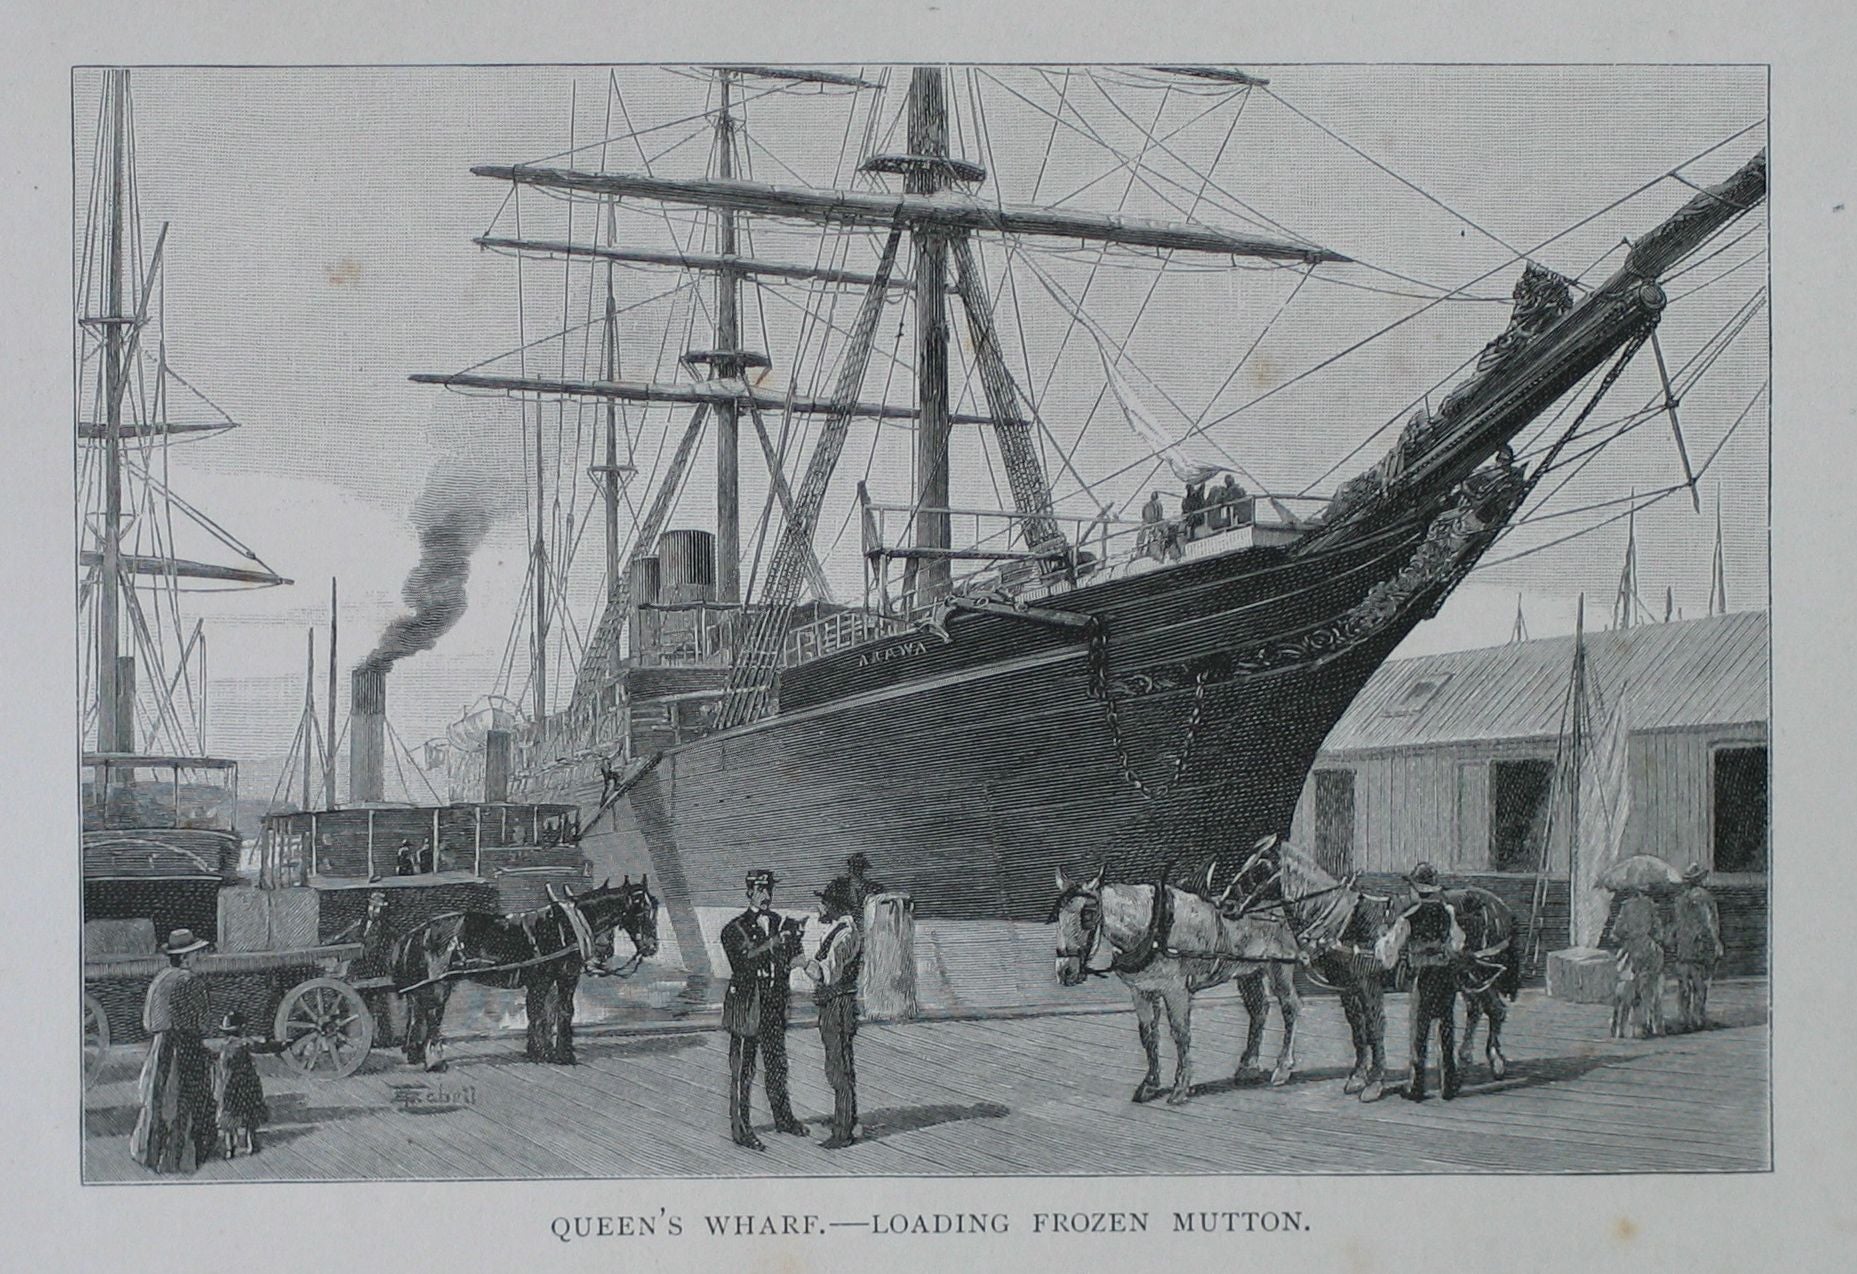 Queen's Wharf - Loading Frozen Mutton